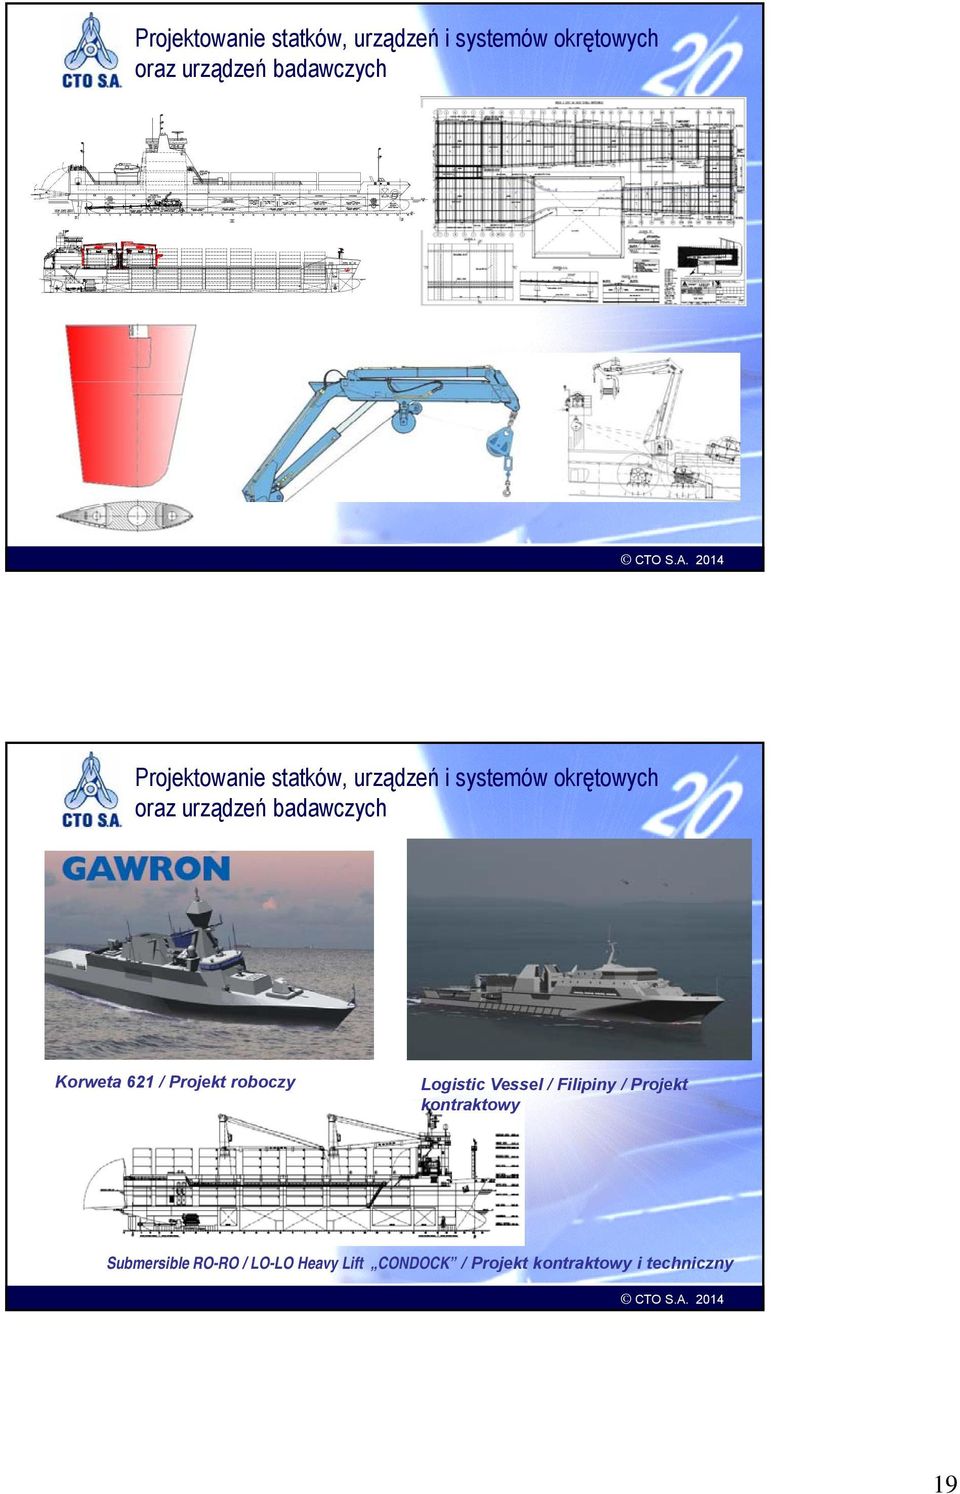 Submersible RO-RO / LO-LO Heavy Lift CONDOCK / Projekt kontraktowy i techniczny